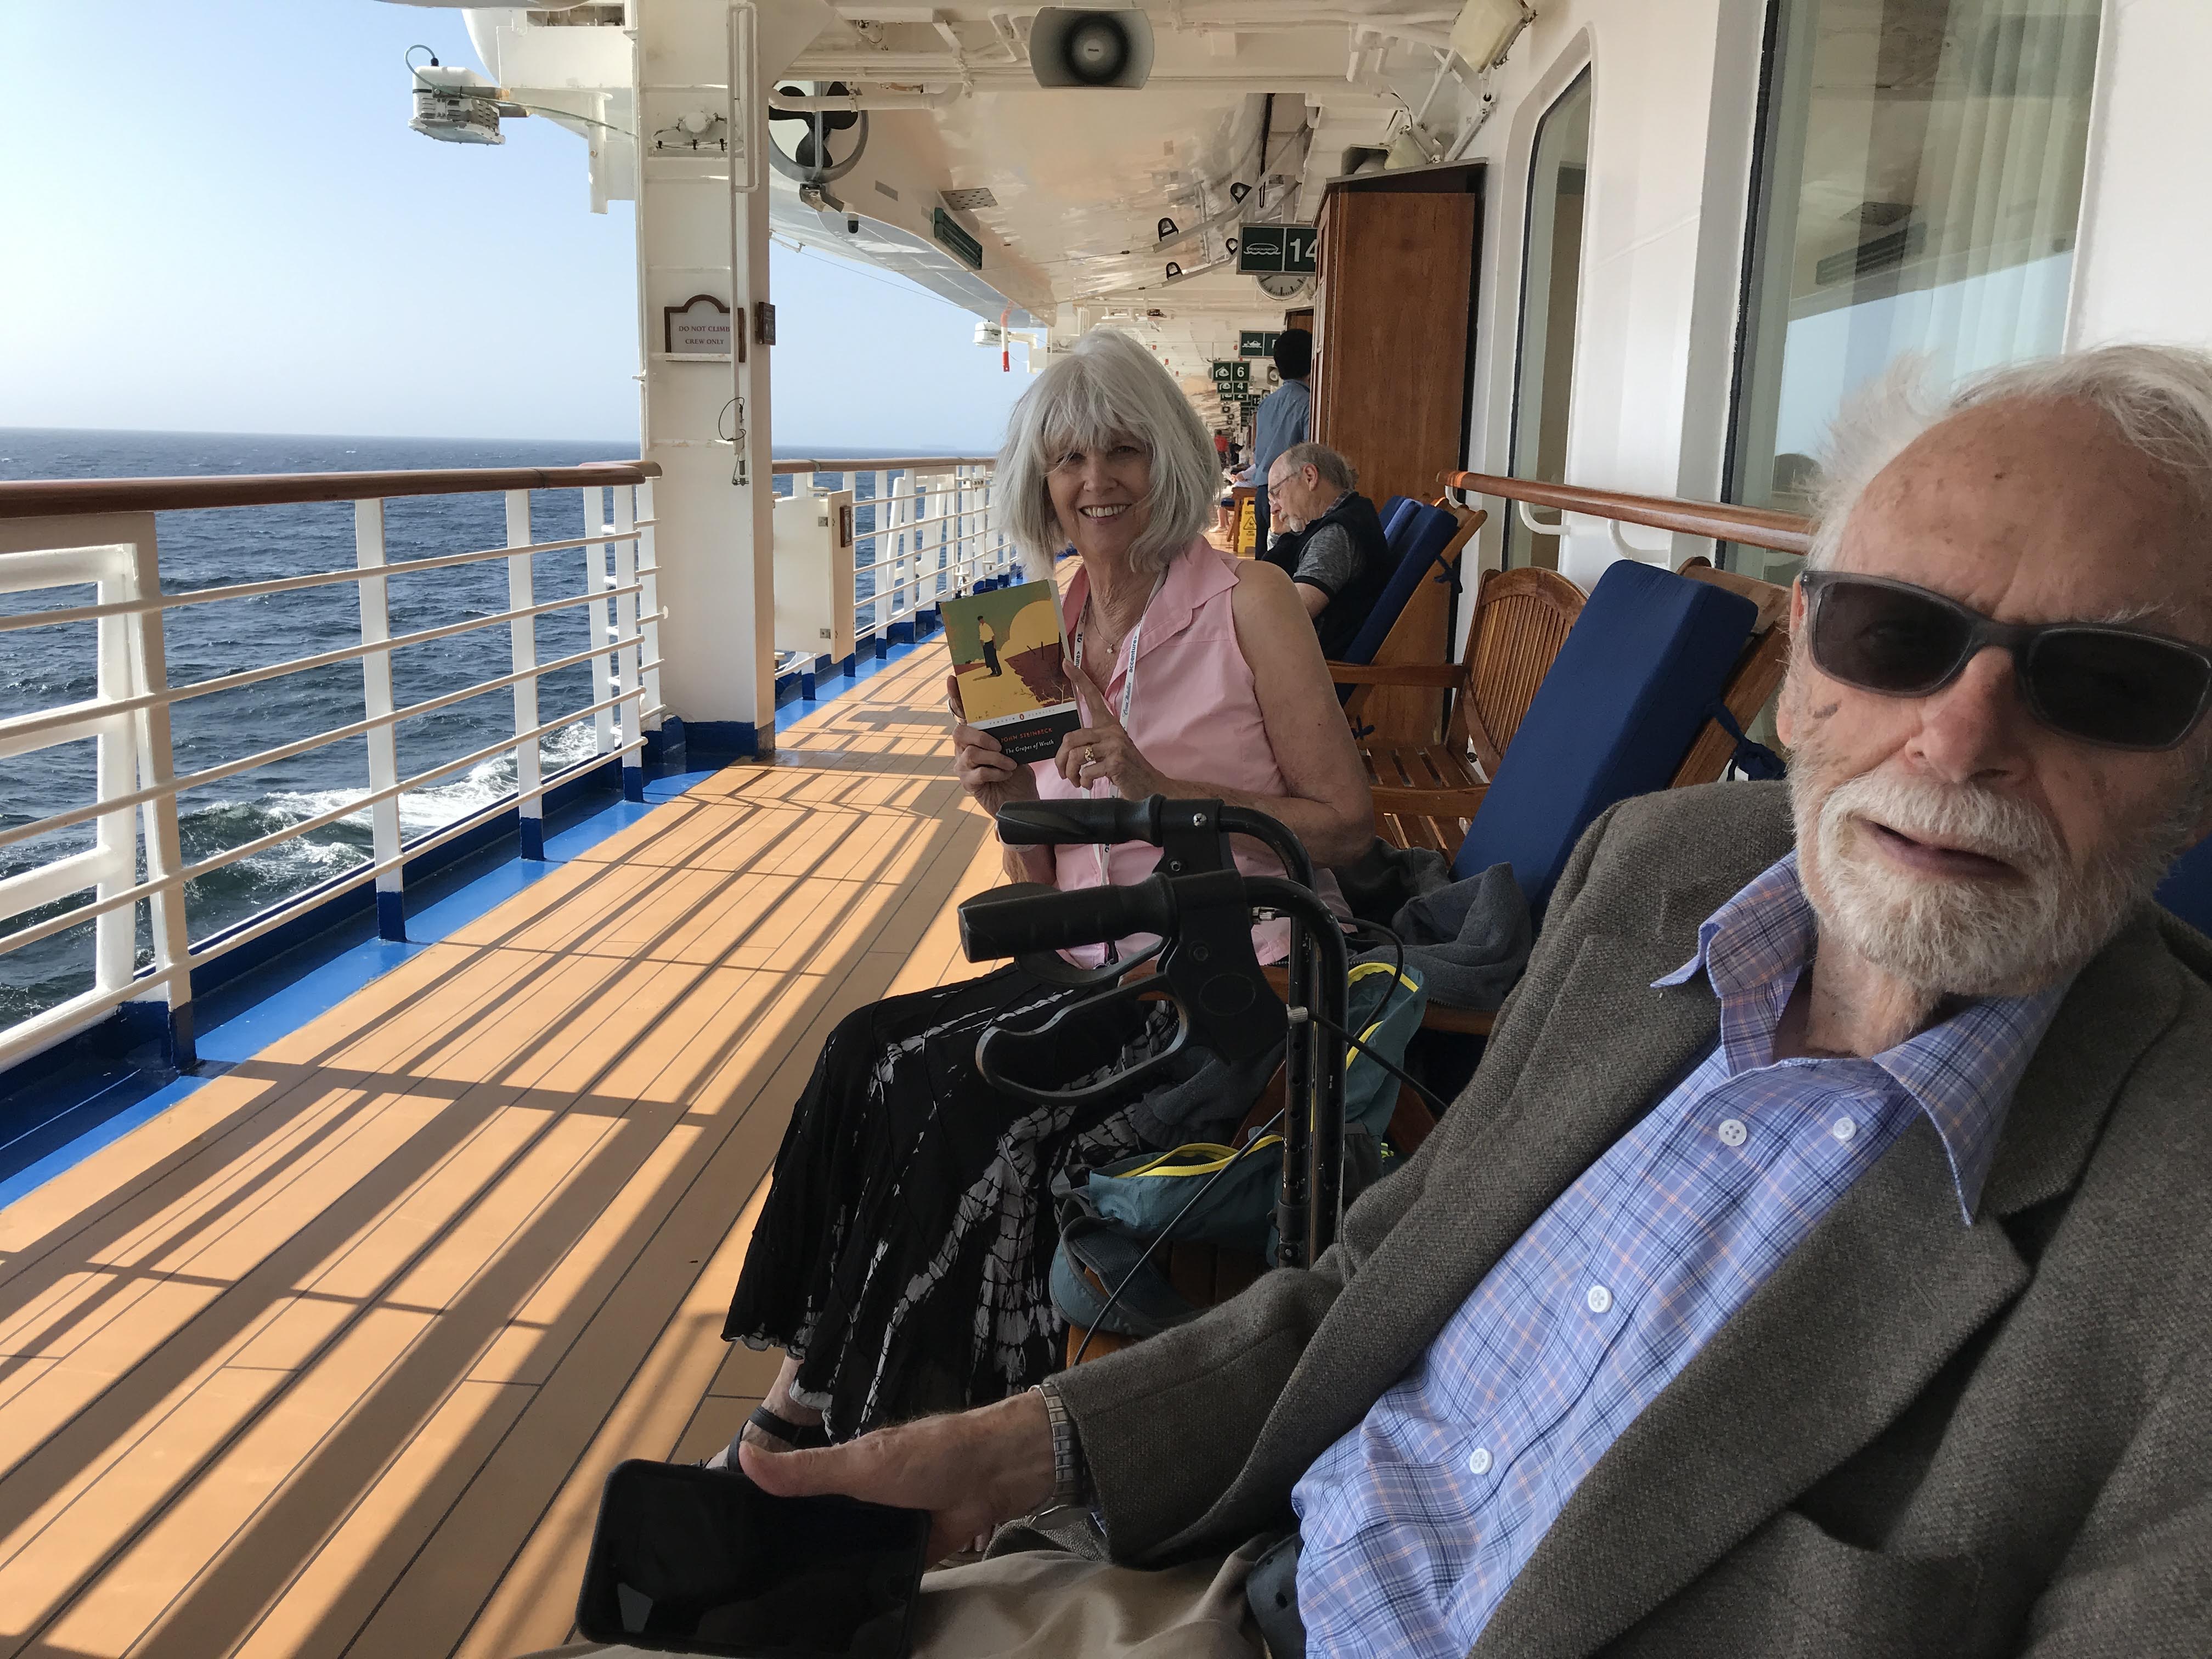 Carol and Ken on a cruise to Hawaii